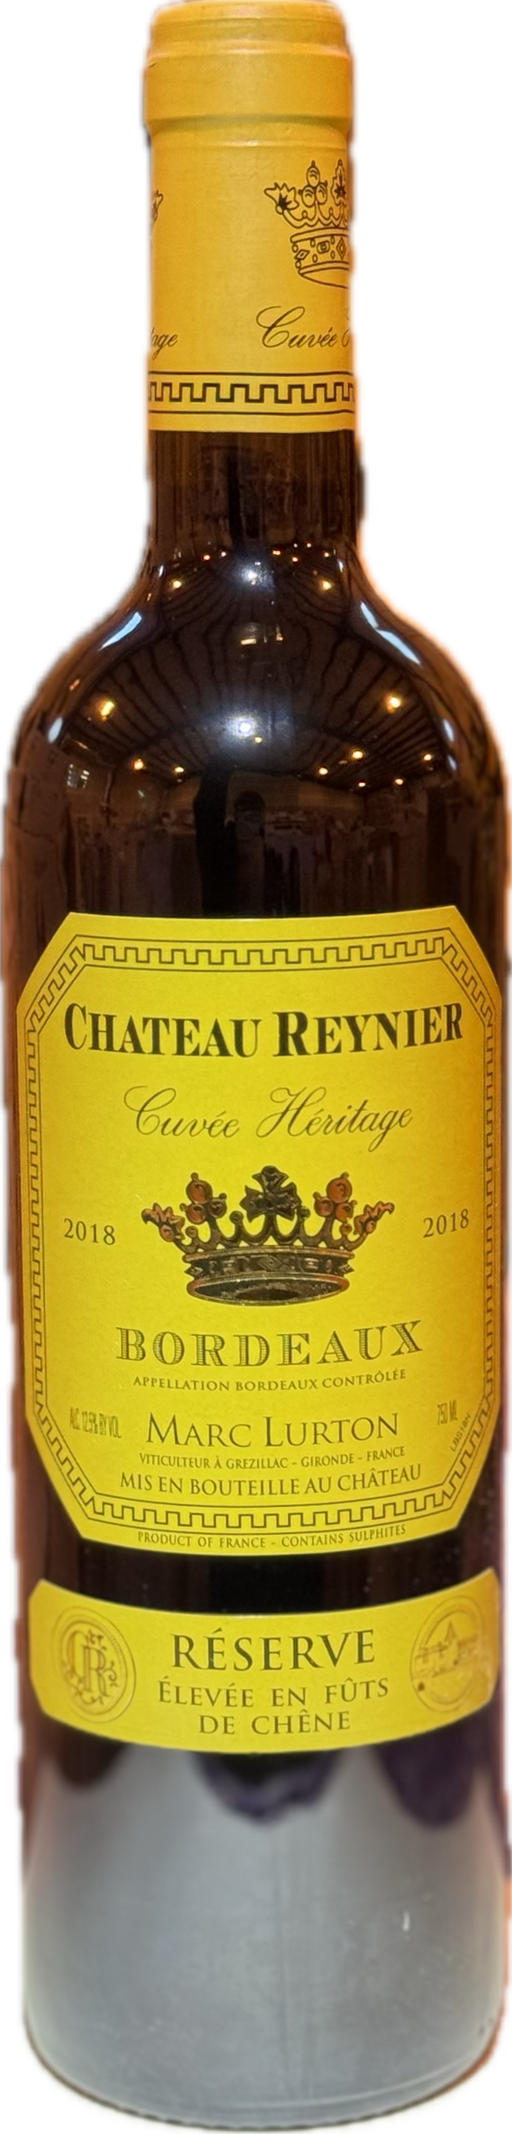 Ch. reynier Cuvee heritage red 2018